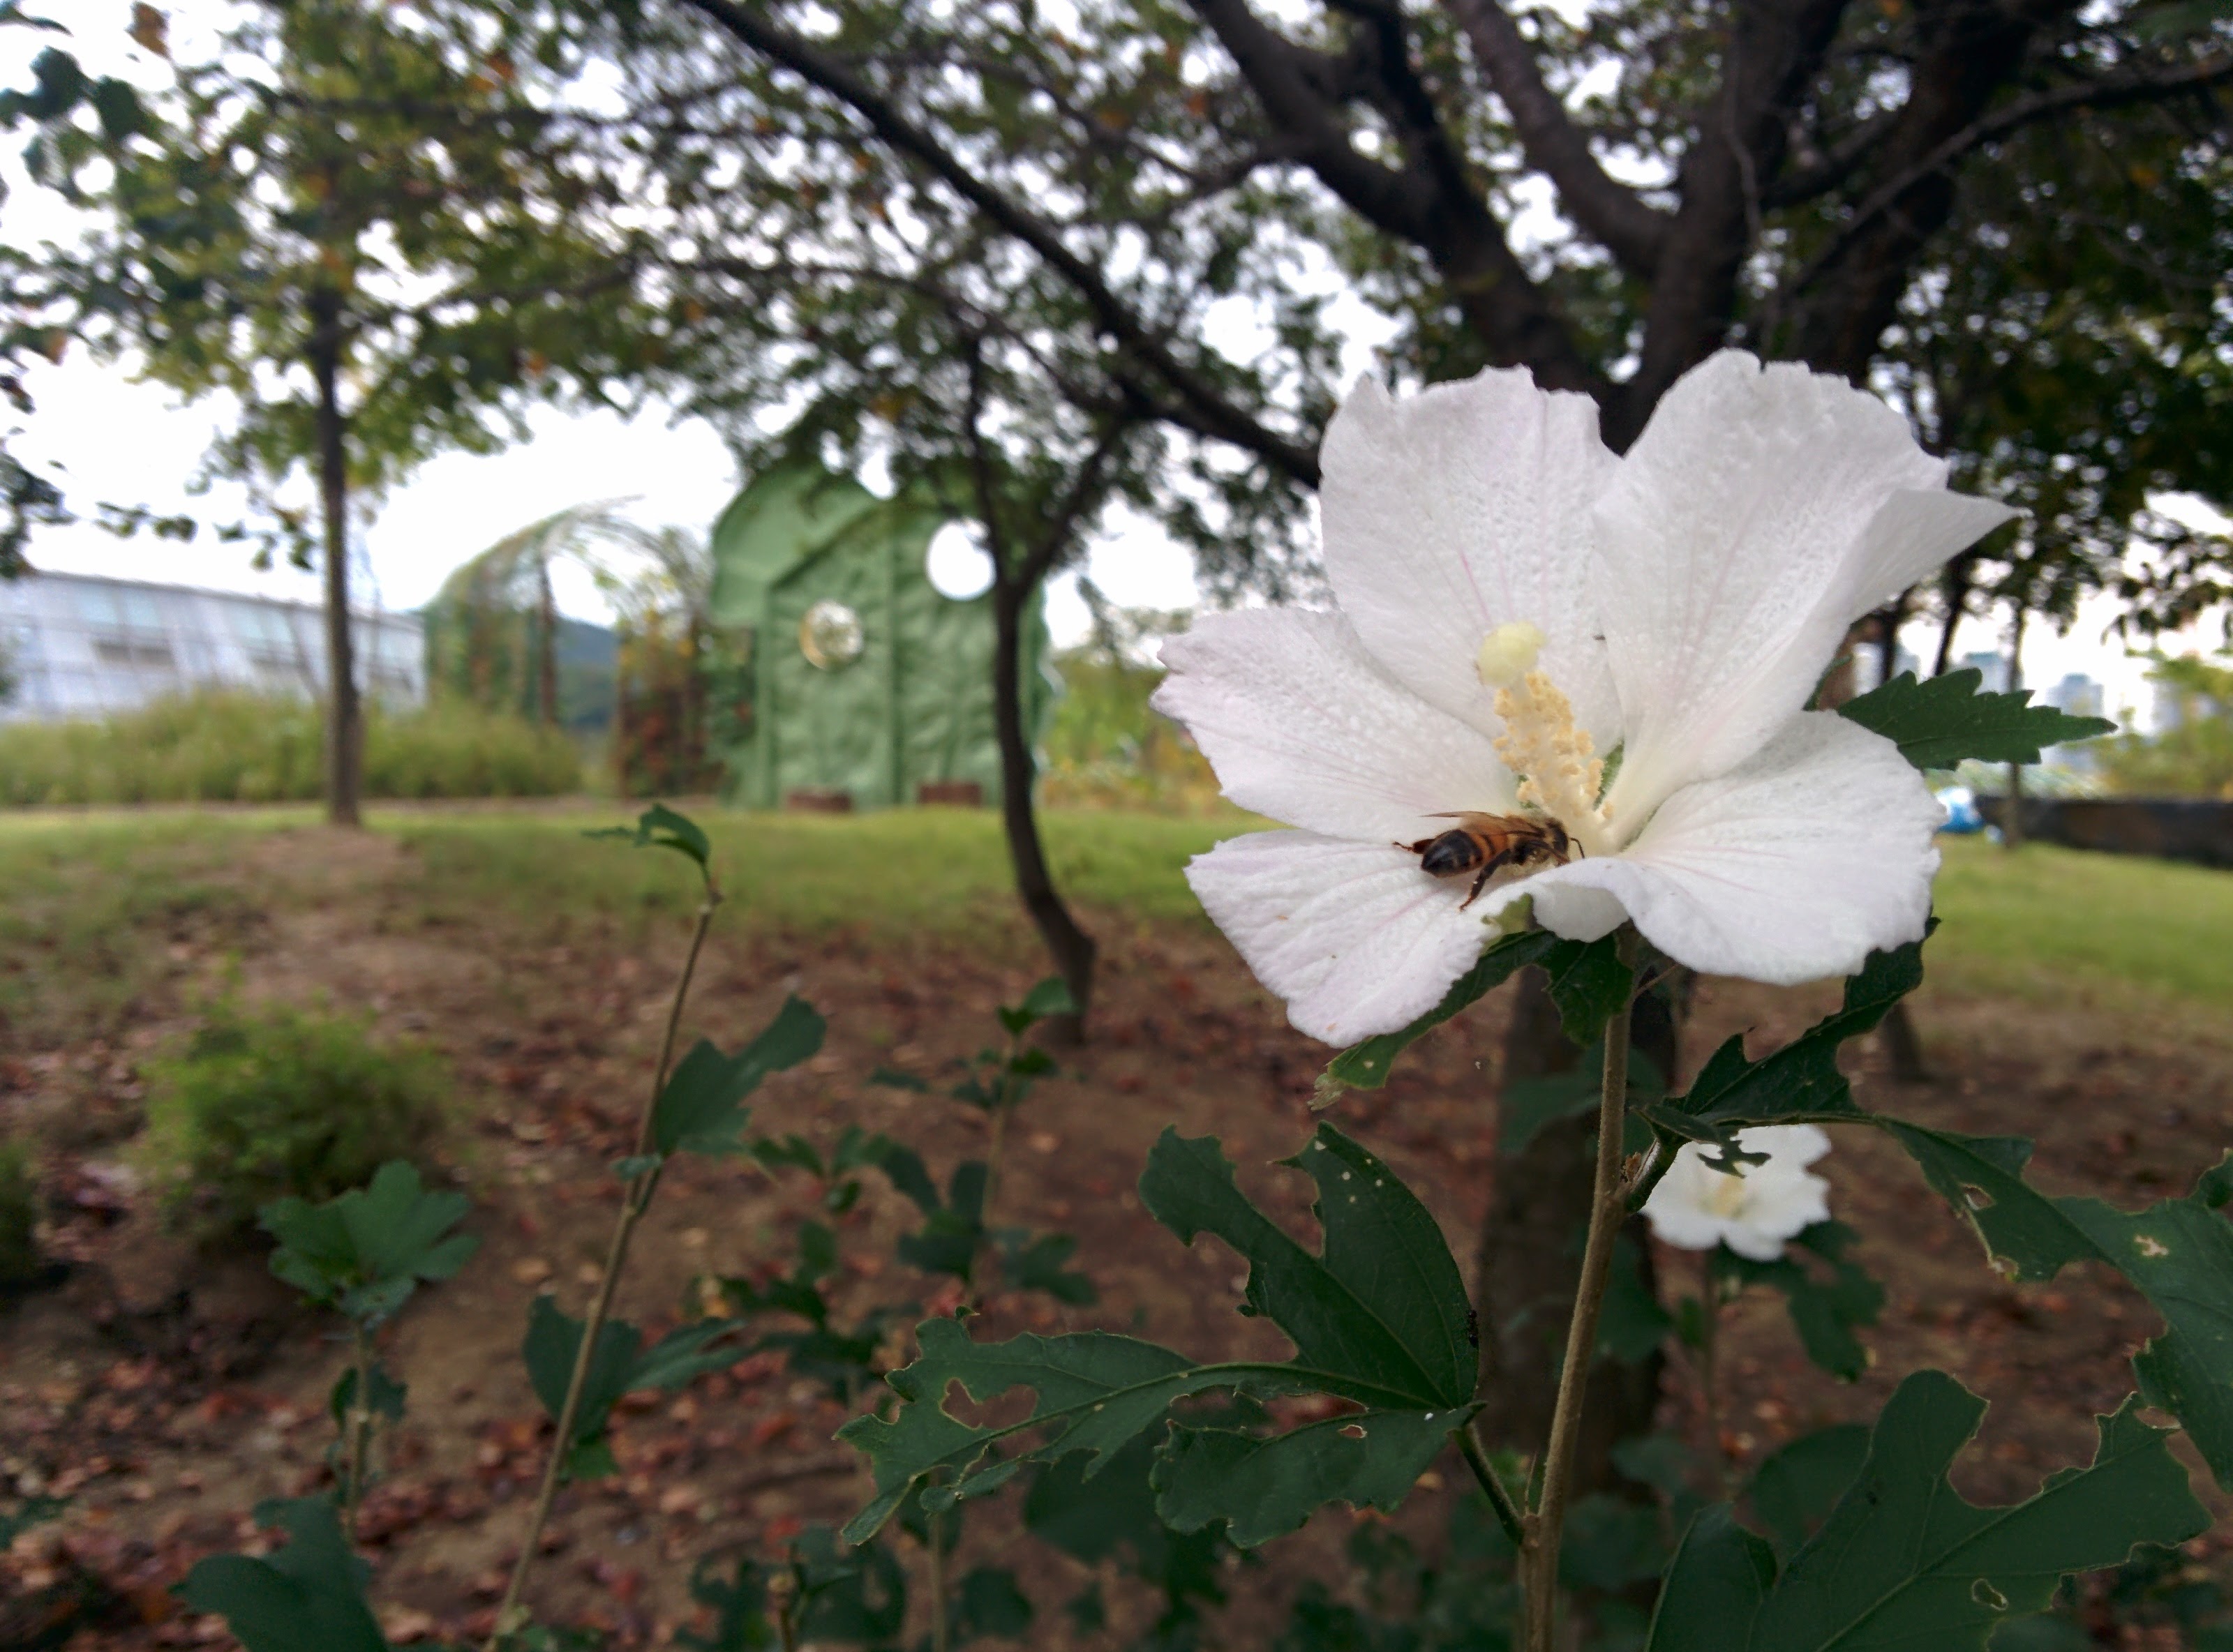 IMG_20150923_161148.jpg 하얀 무궁화 꽃을 찾은 꿀벌